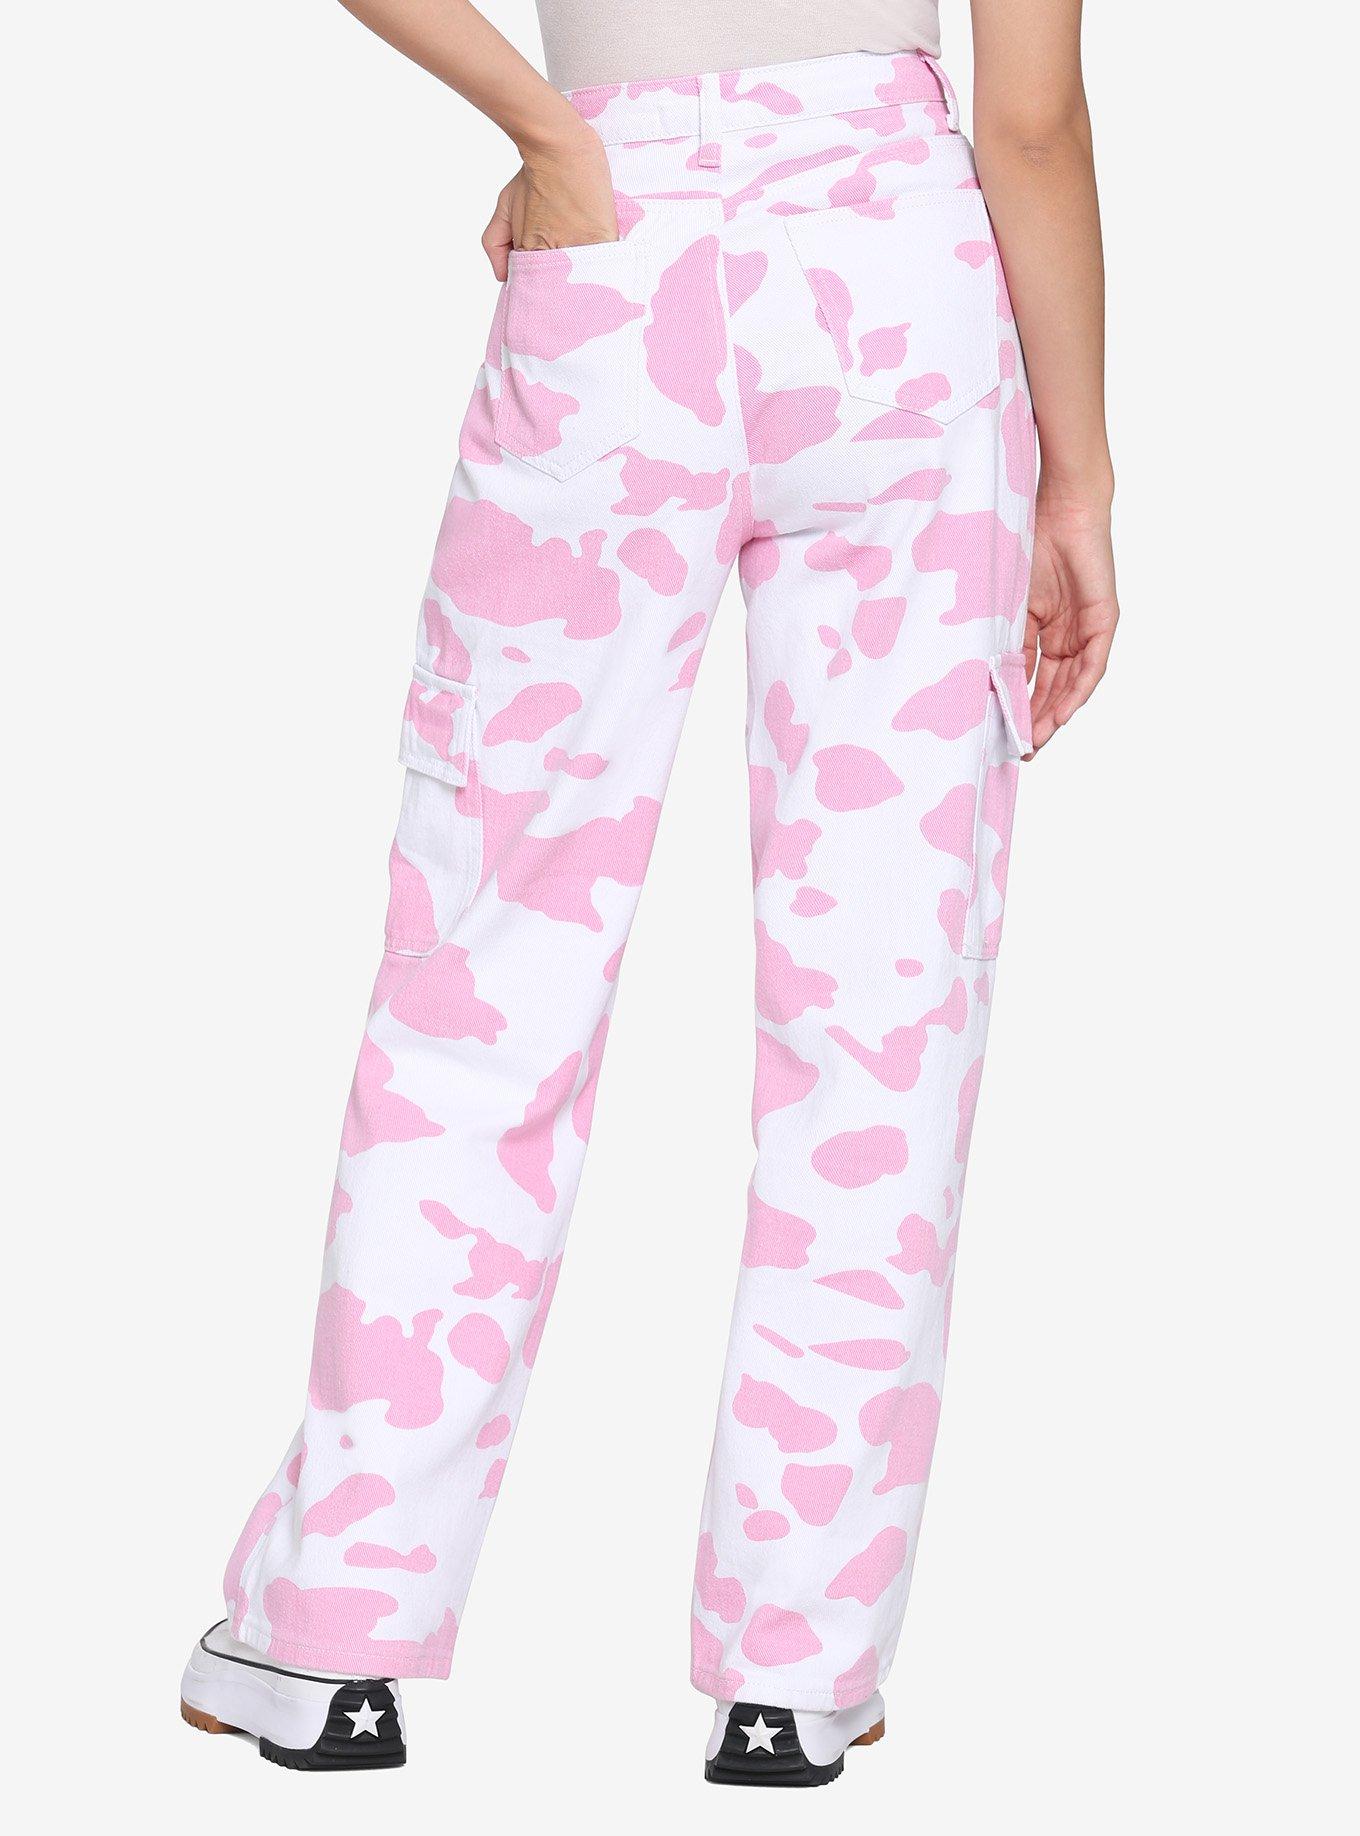 Pink Cow Print Girls High-Waisted Denim Pants, PINK  WHITE, alternate